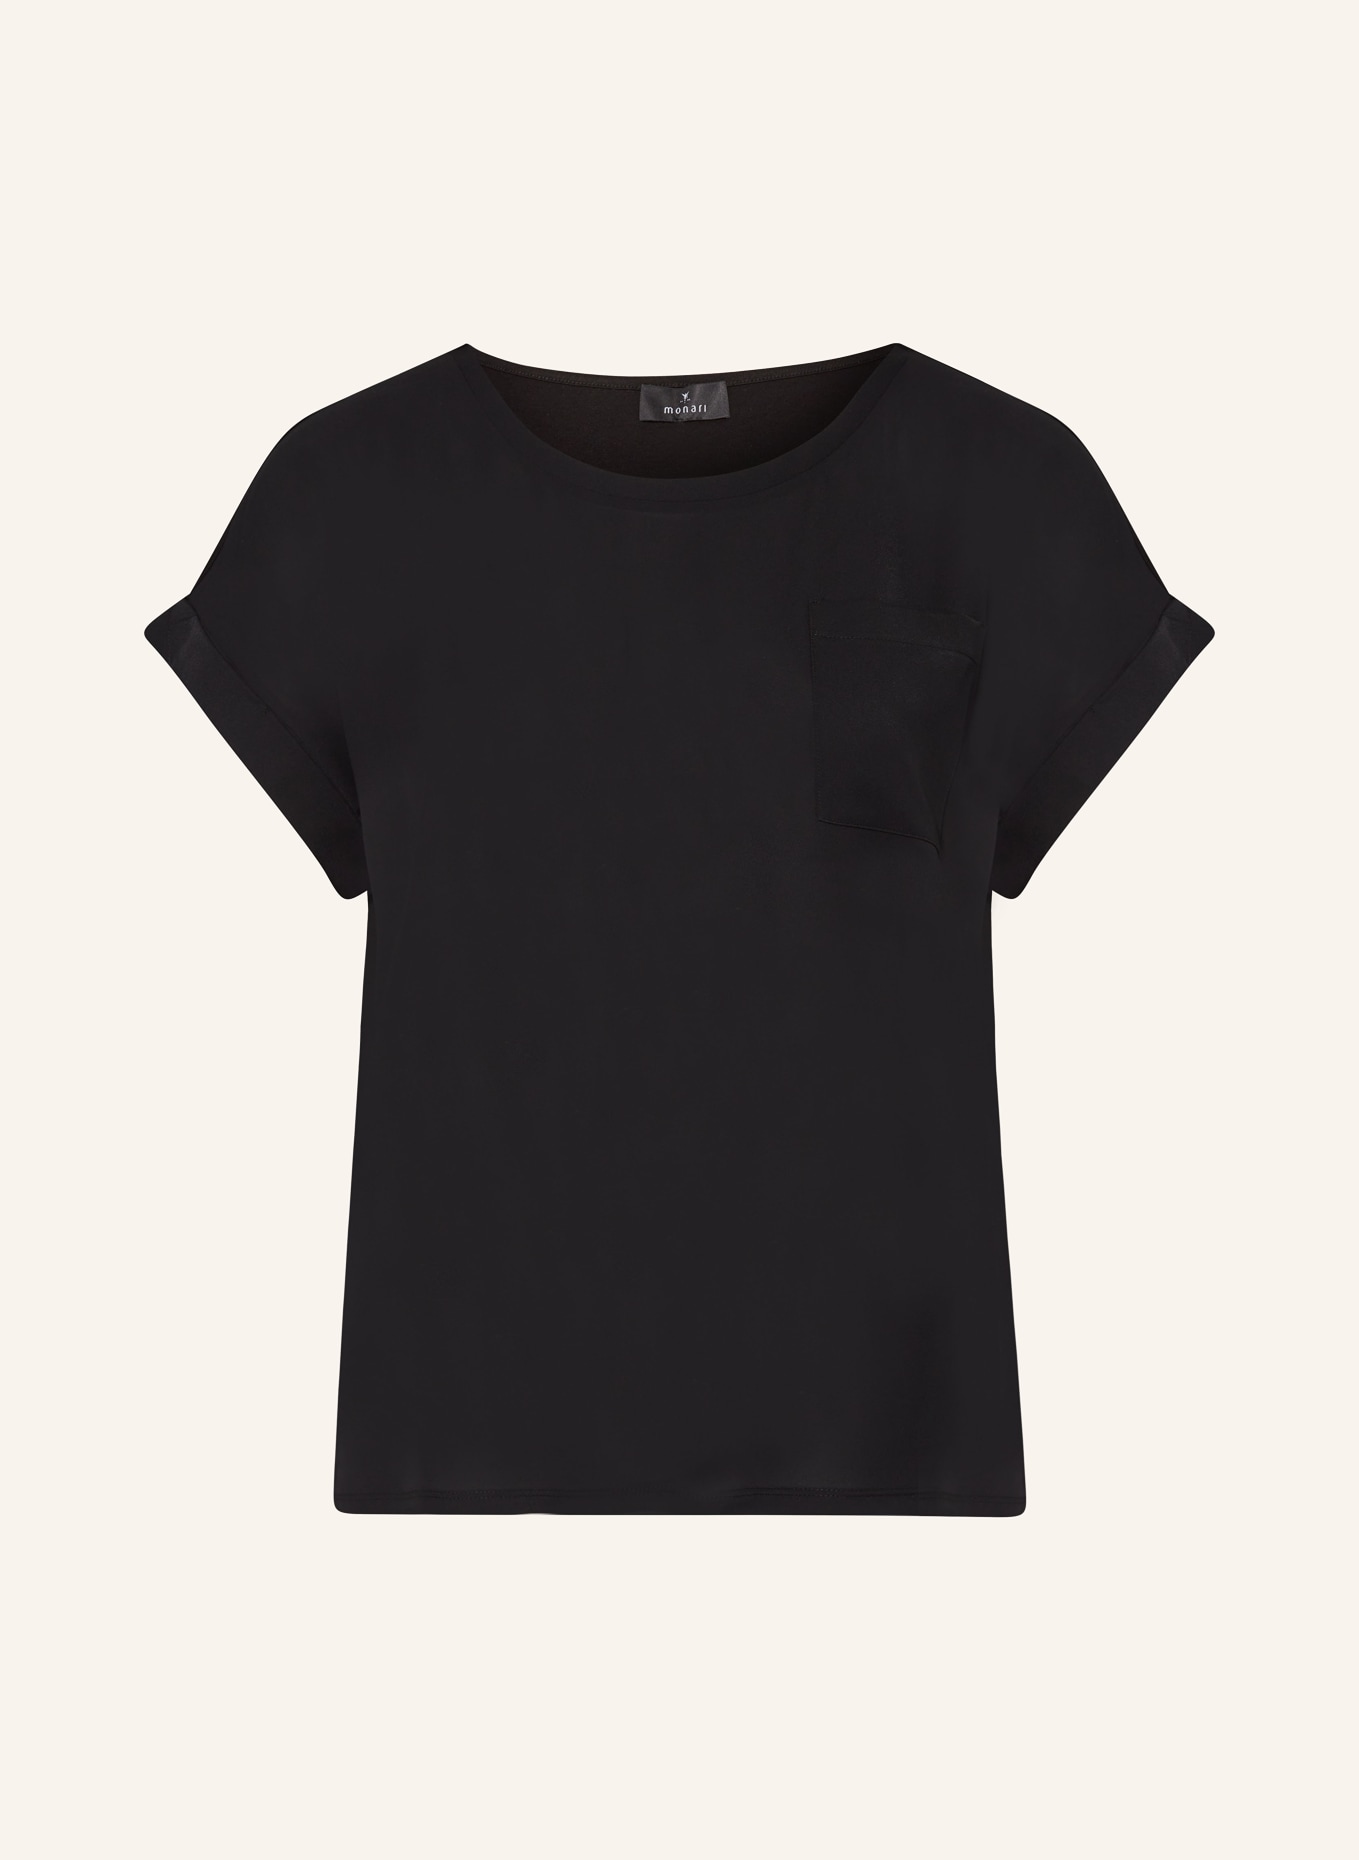 monari T-shirt in mixed materials, Color: BLACK (Image 1)